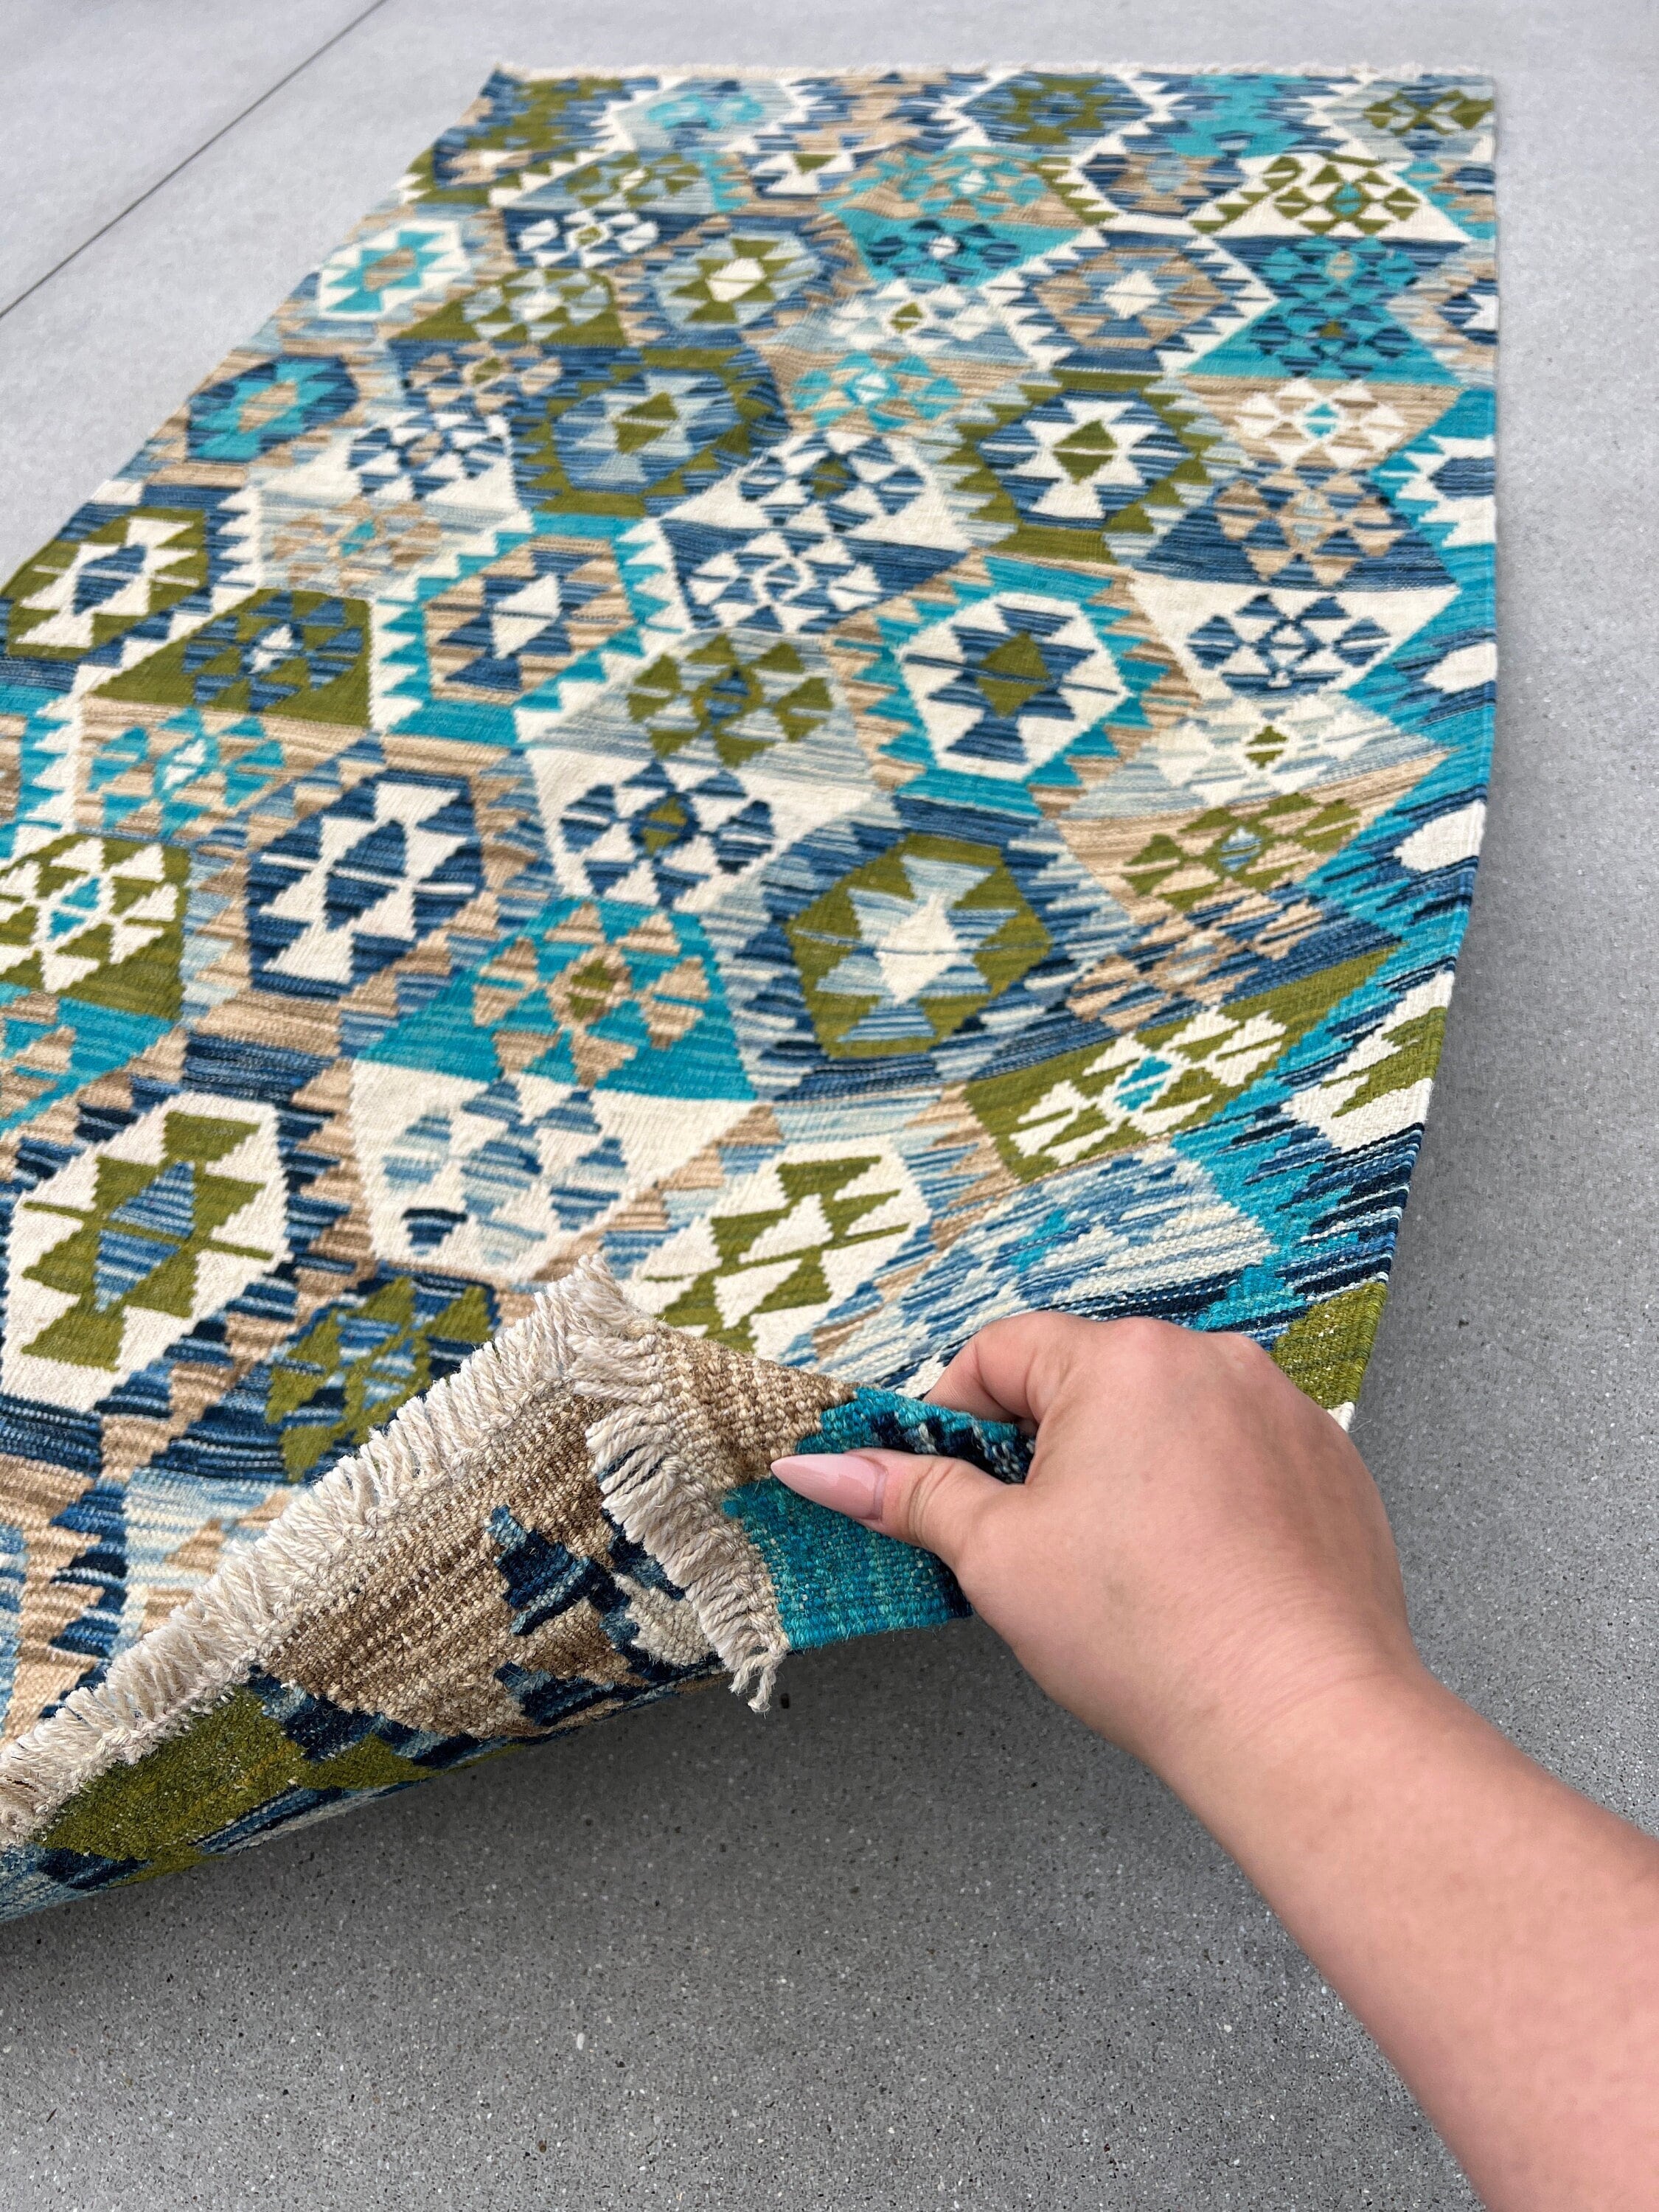 4x7 (120x215) Handmade Afghan Kilim Rug | Sky Denim Blue Ivory Tan Brown Olive Green | Flatweave Flat Woven Persian Geometric Wool Outdoor